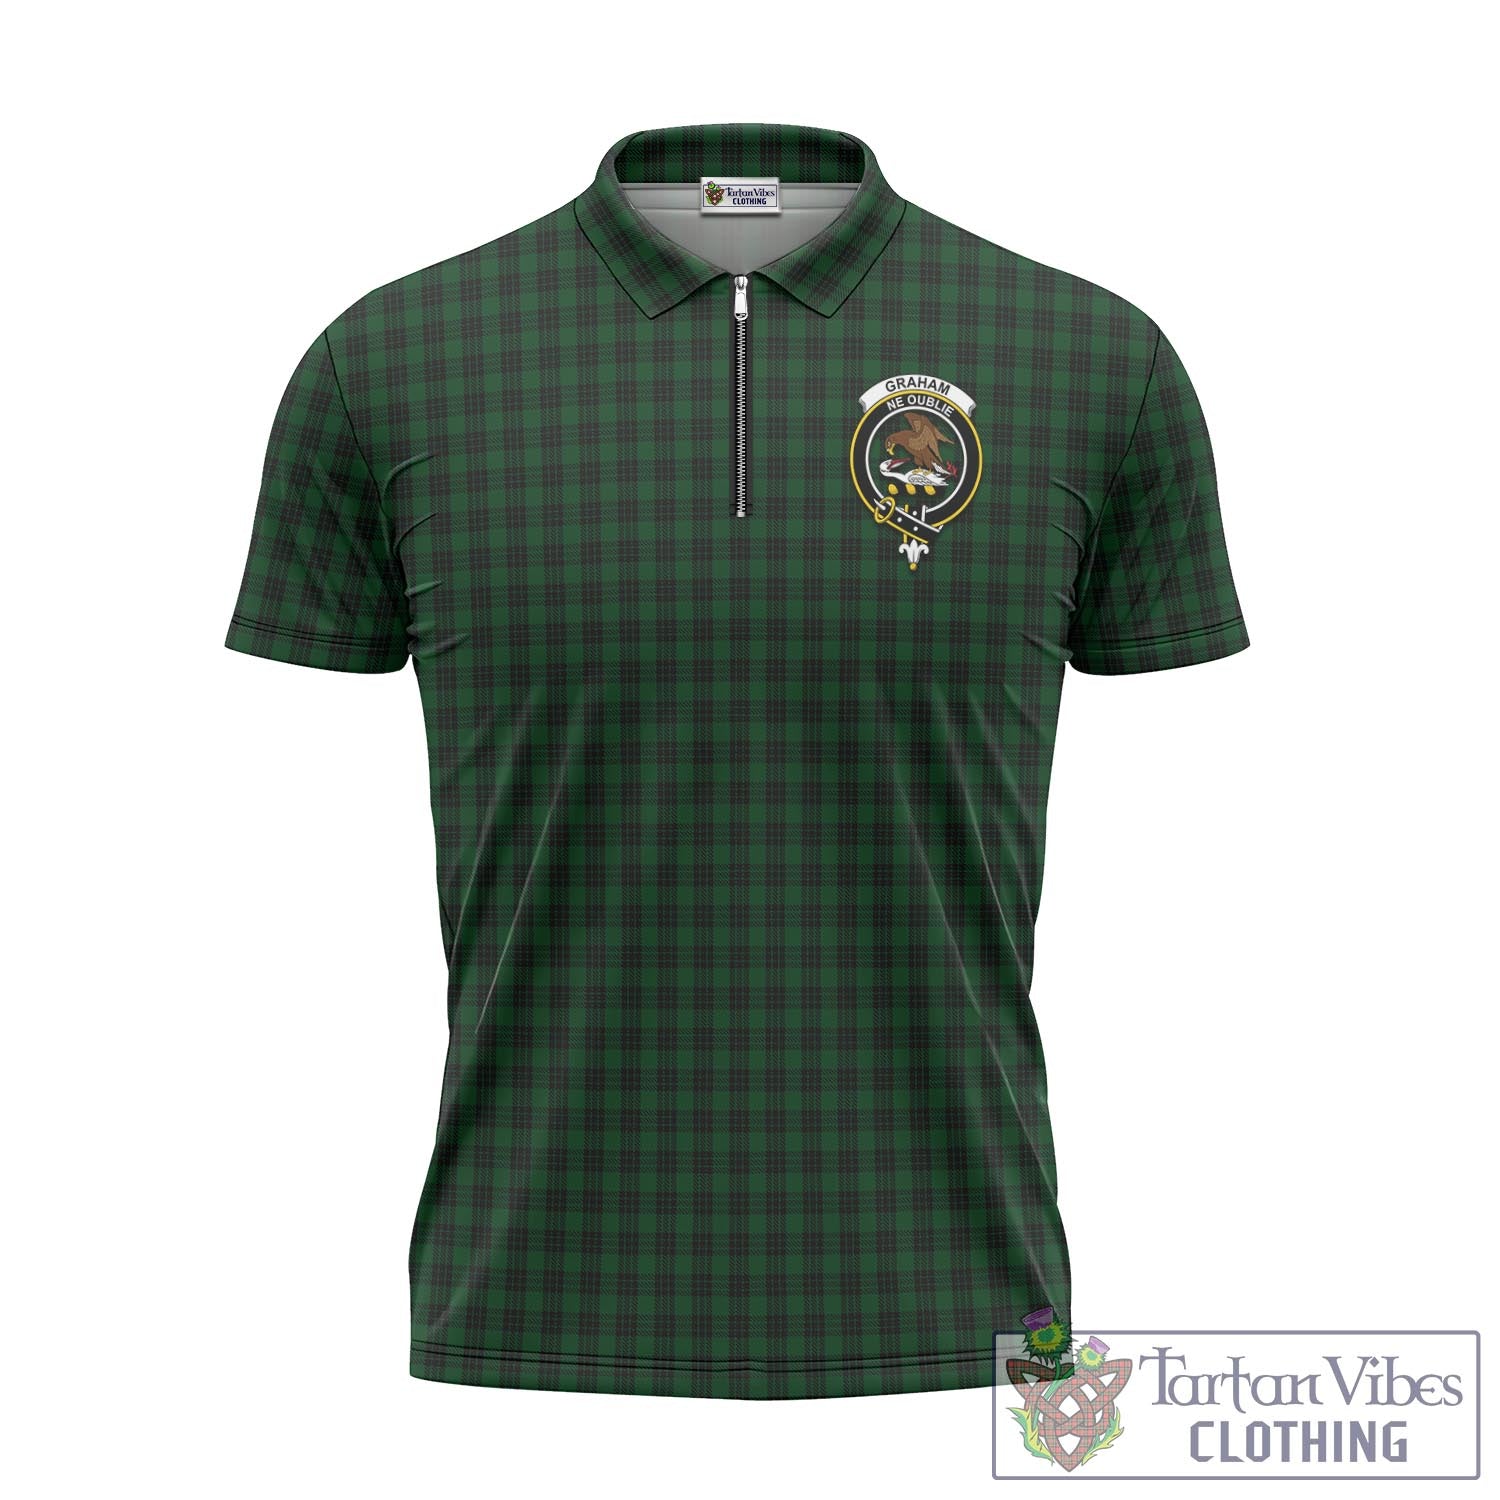 Tartan Vibes Clothing Graham Tartan Zipper Polo Shirt with Family Crest